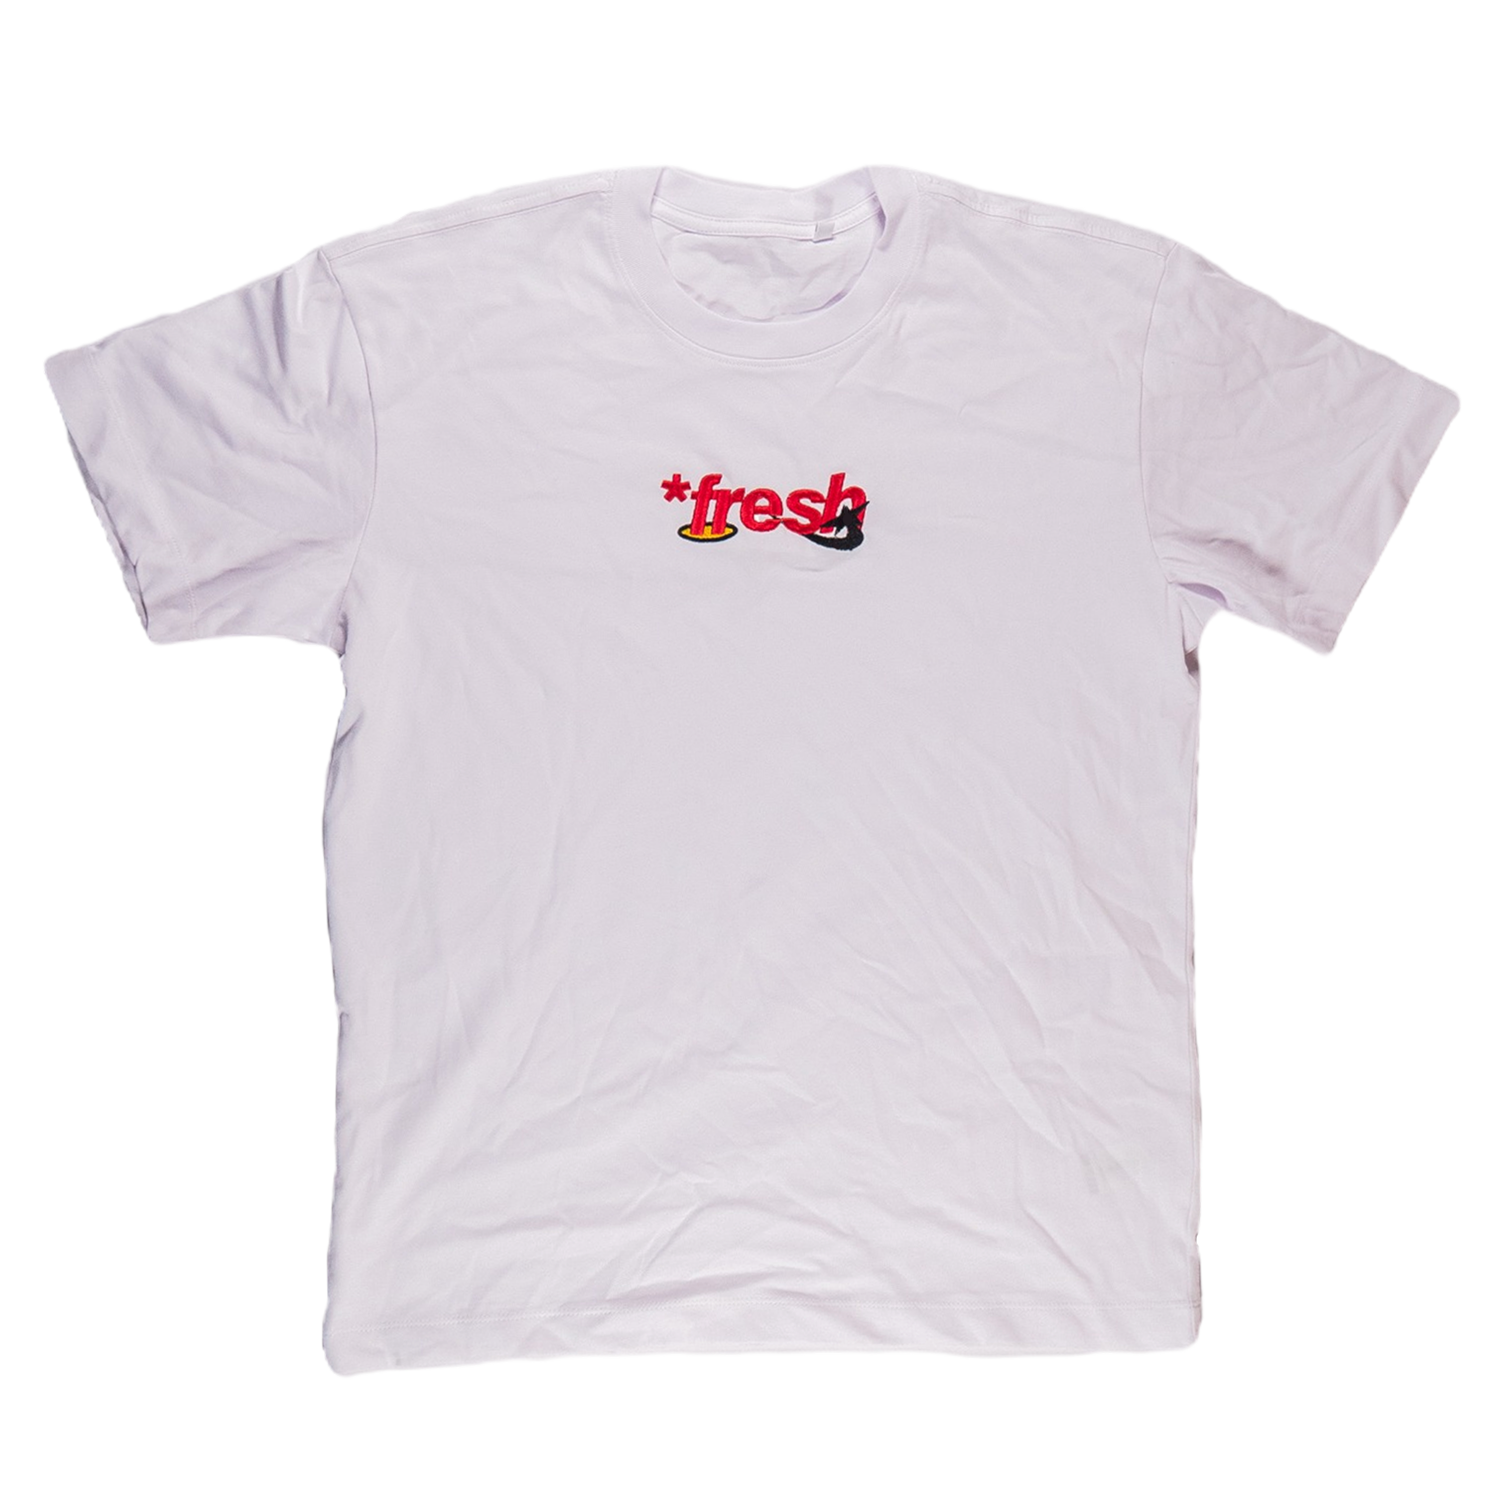 Fresh Asterisk Unisex Embroidered White Heavyweight T-Shirt